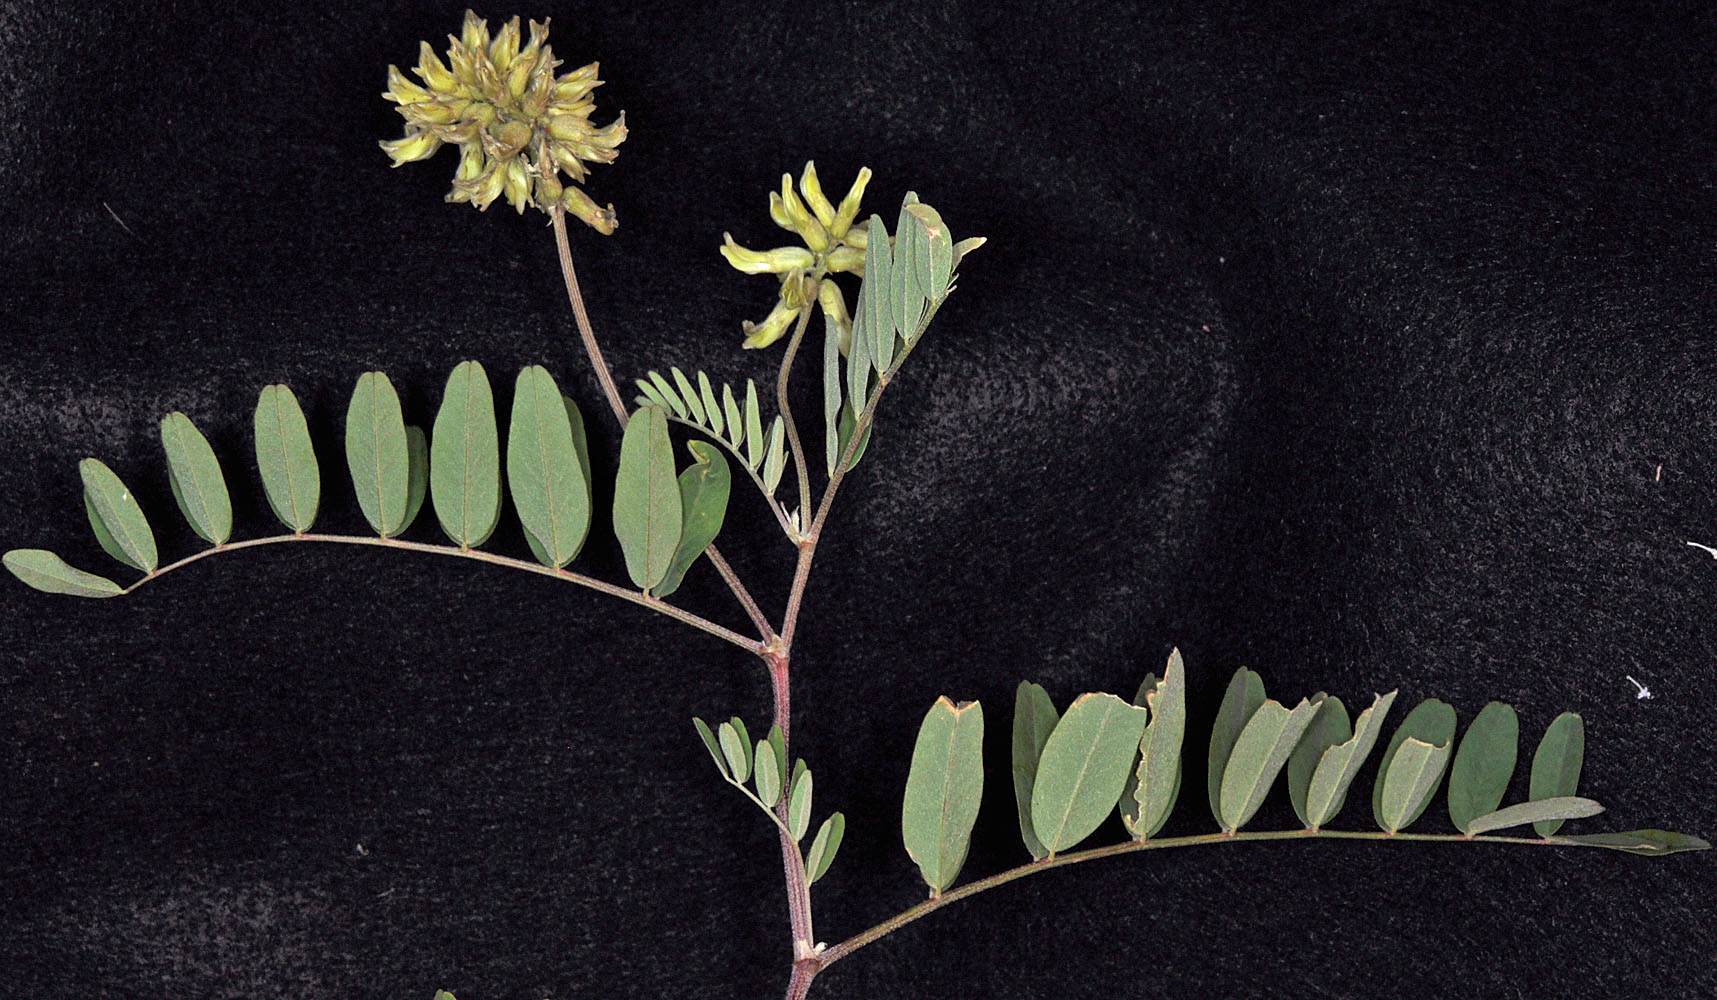 Flora of Eastern Washington Image: Astragalus canadensis